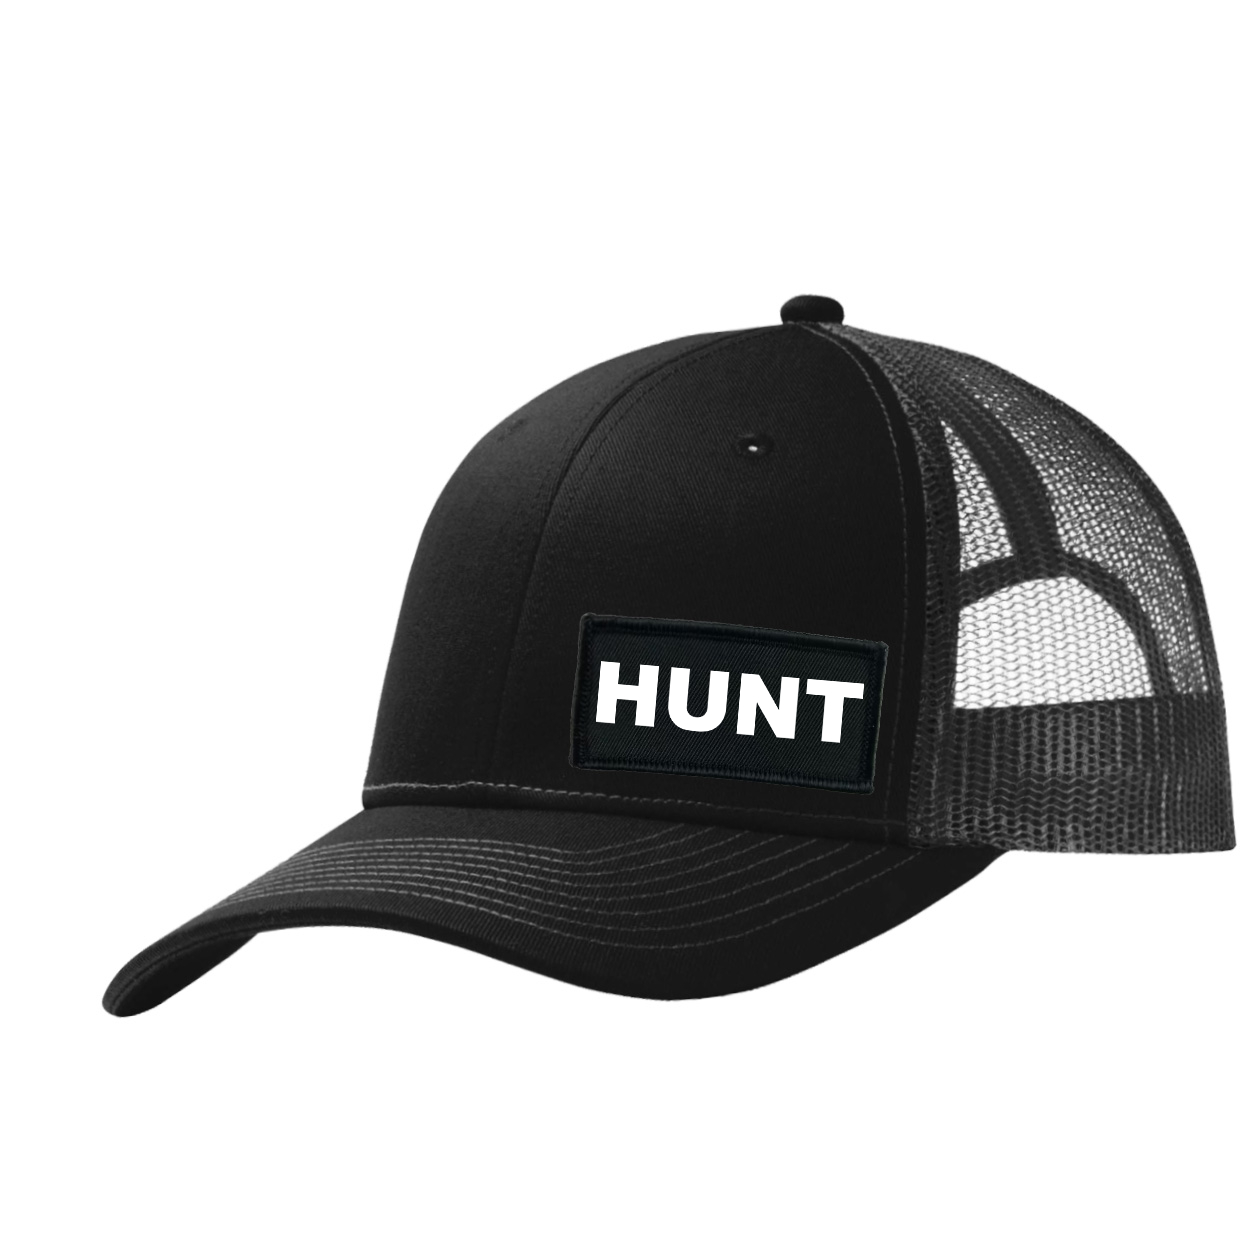 Hunt Brand Logo Night Out Woven Patch Snapback Trucker Hat Black/Dark Gray (White Logo)